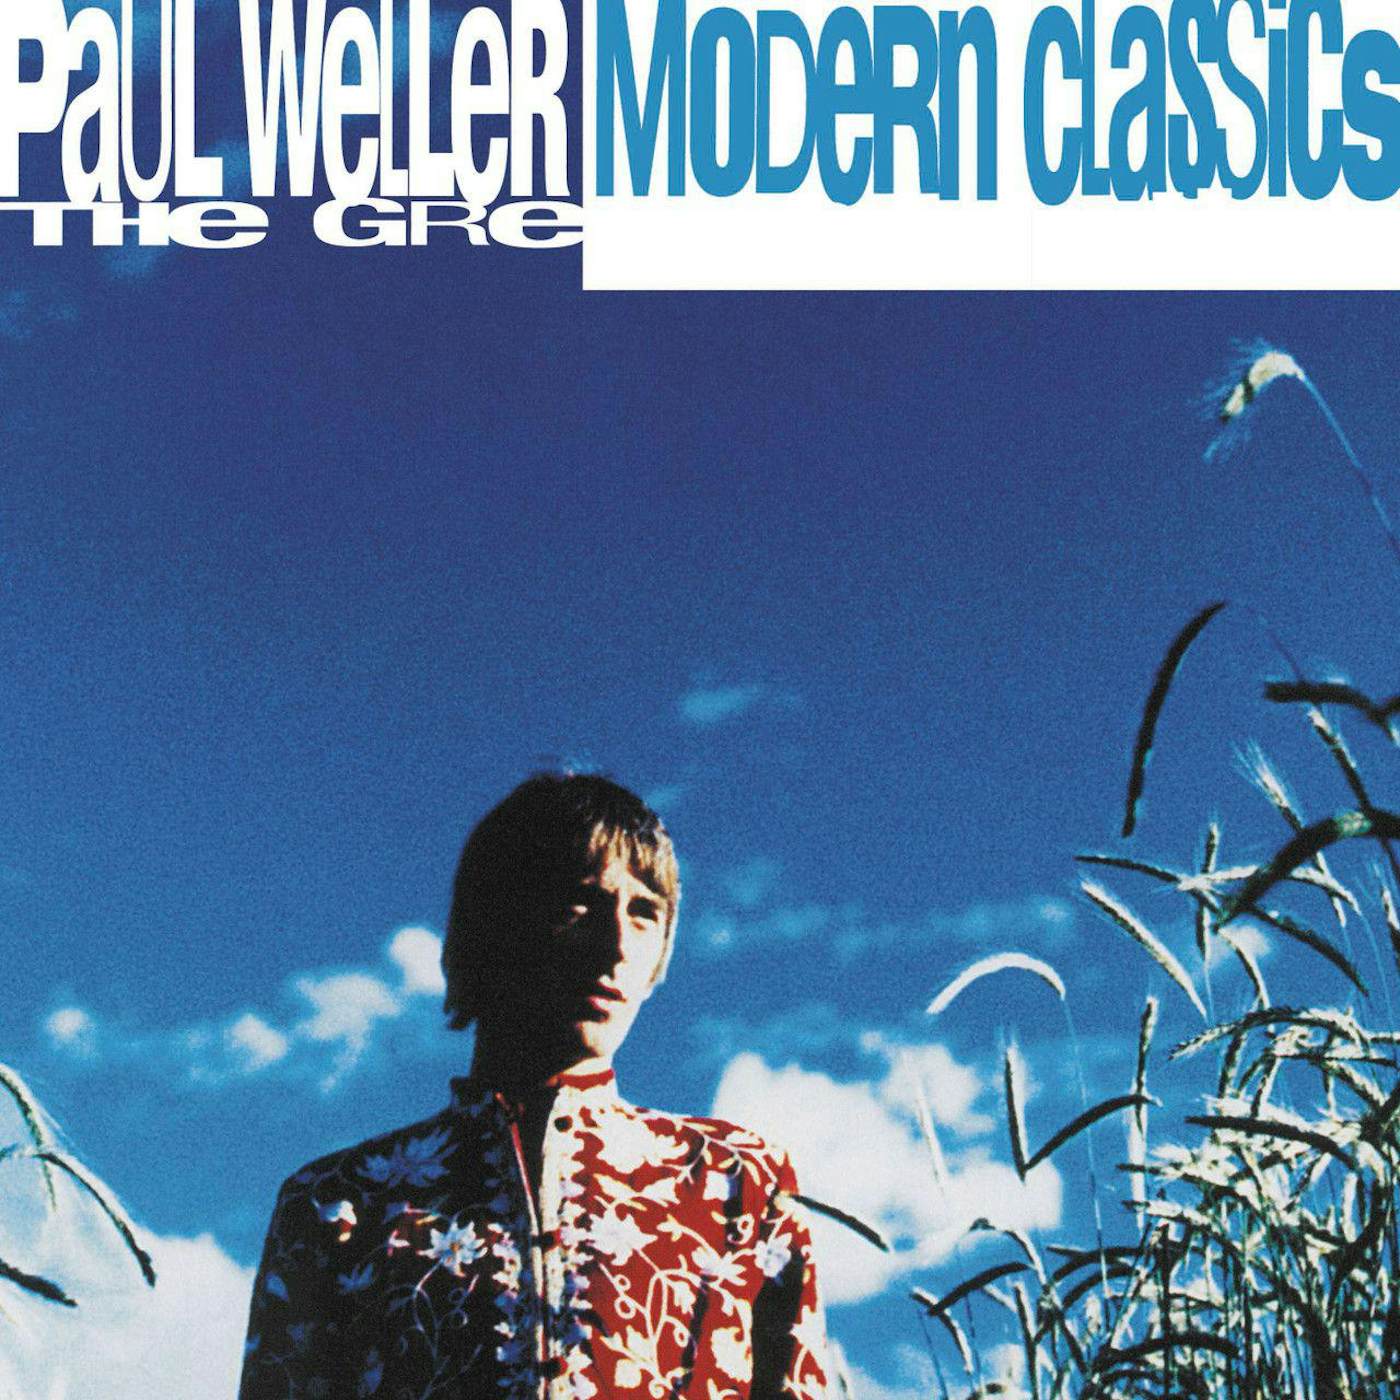 Paul Weller Modern Classics (The Greatest Hits) Vinyl Record